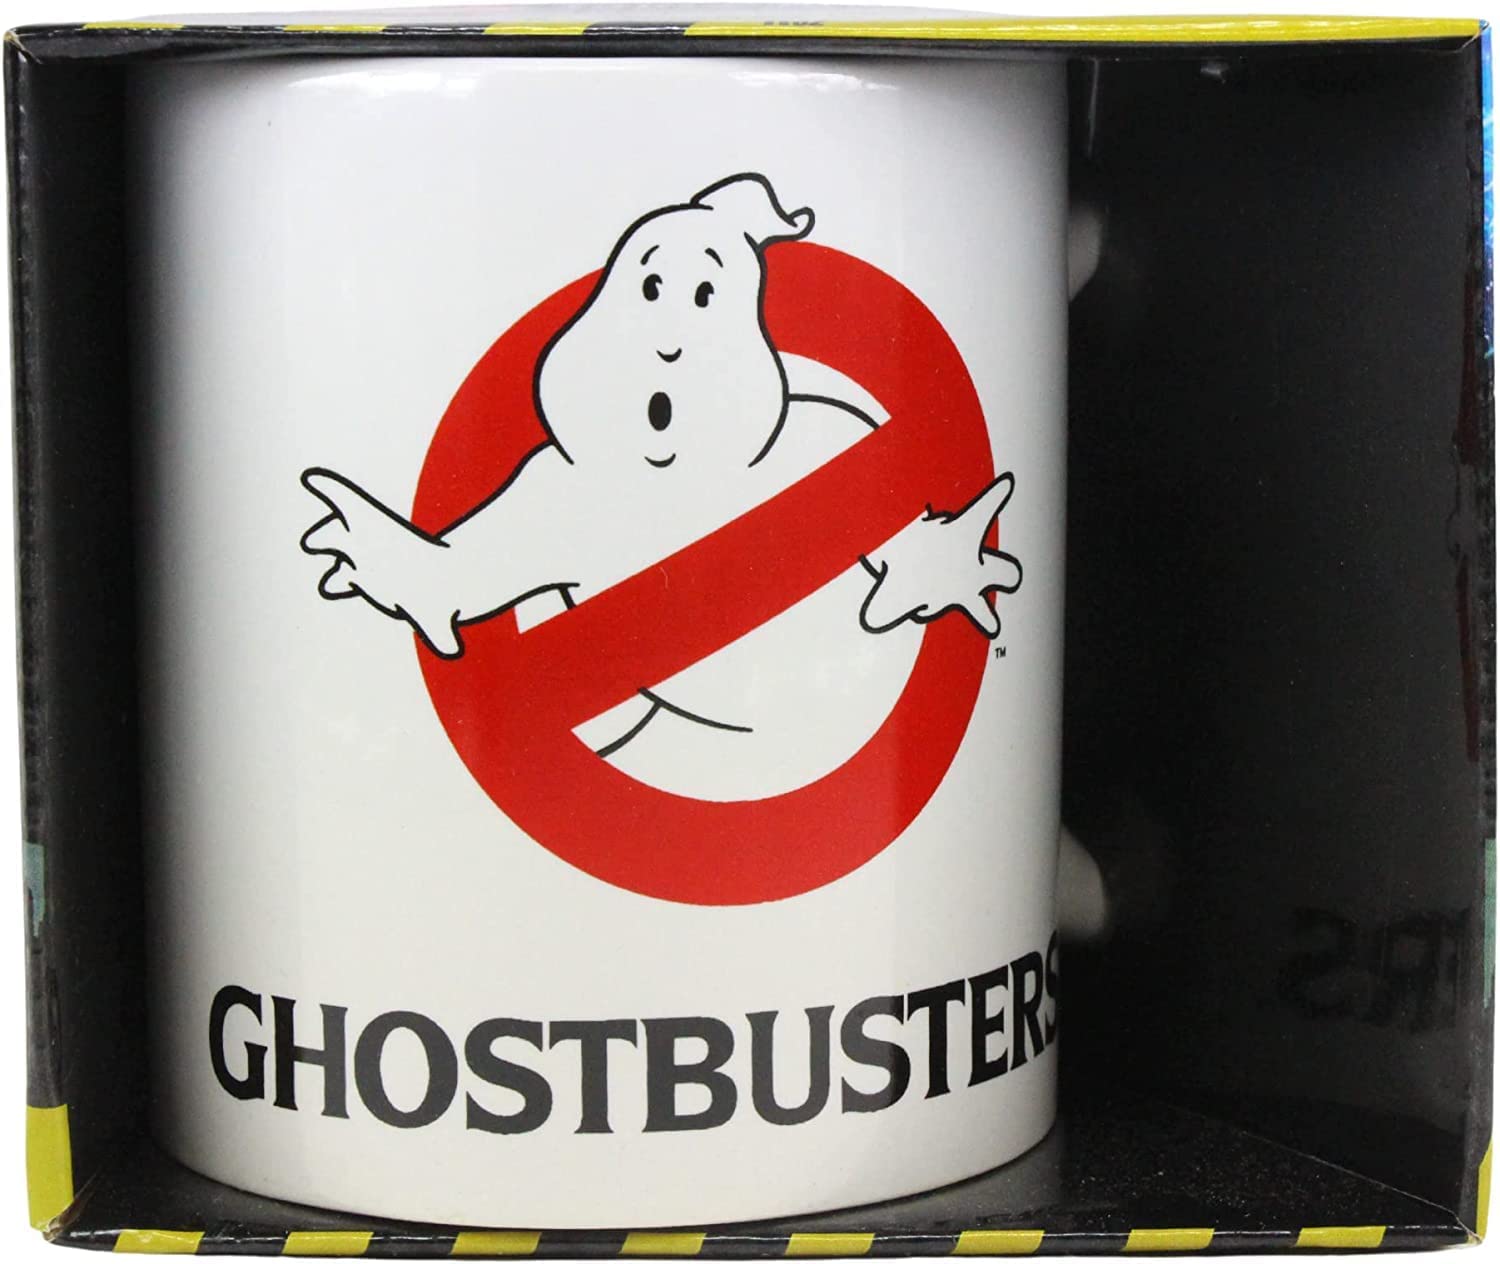 Ghostbusters Slimer 5" Plush & No Ghost Logo 300ml Mug Bundle - Toptoys2u